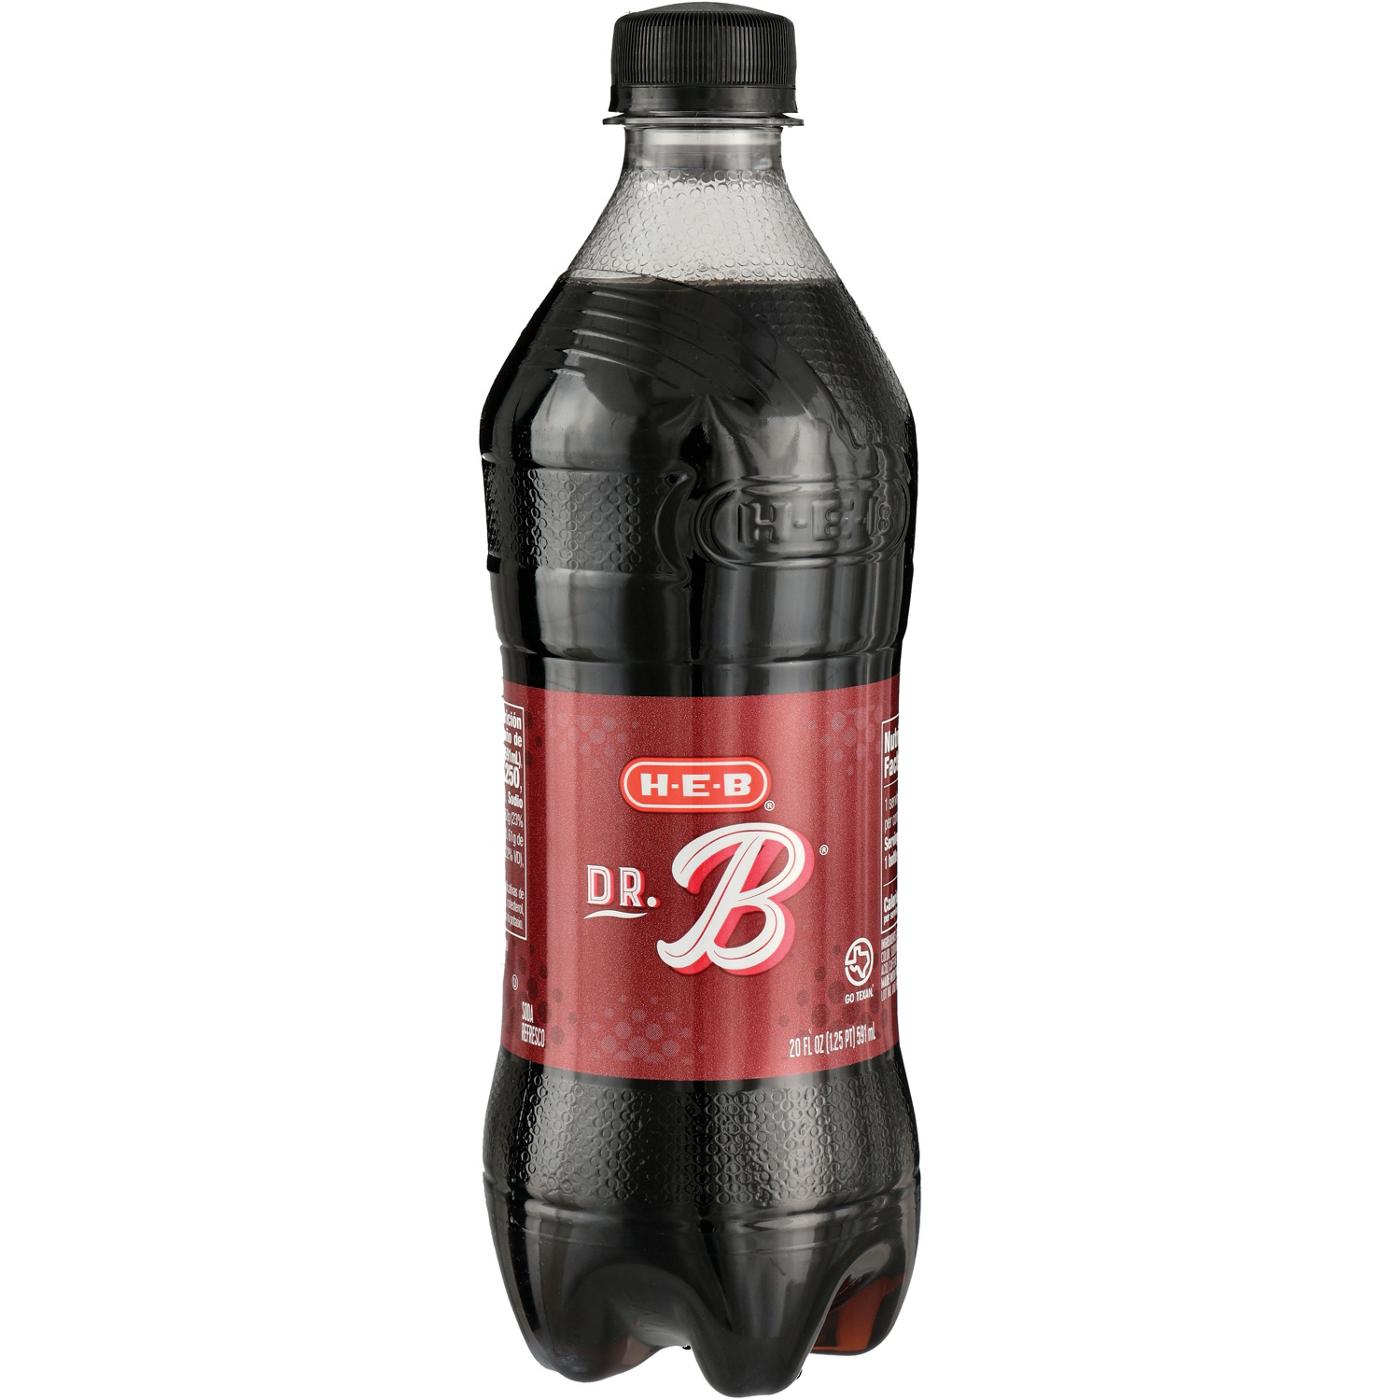 H-E-B Dr. B Soda; image 2 of 2